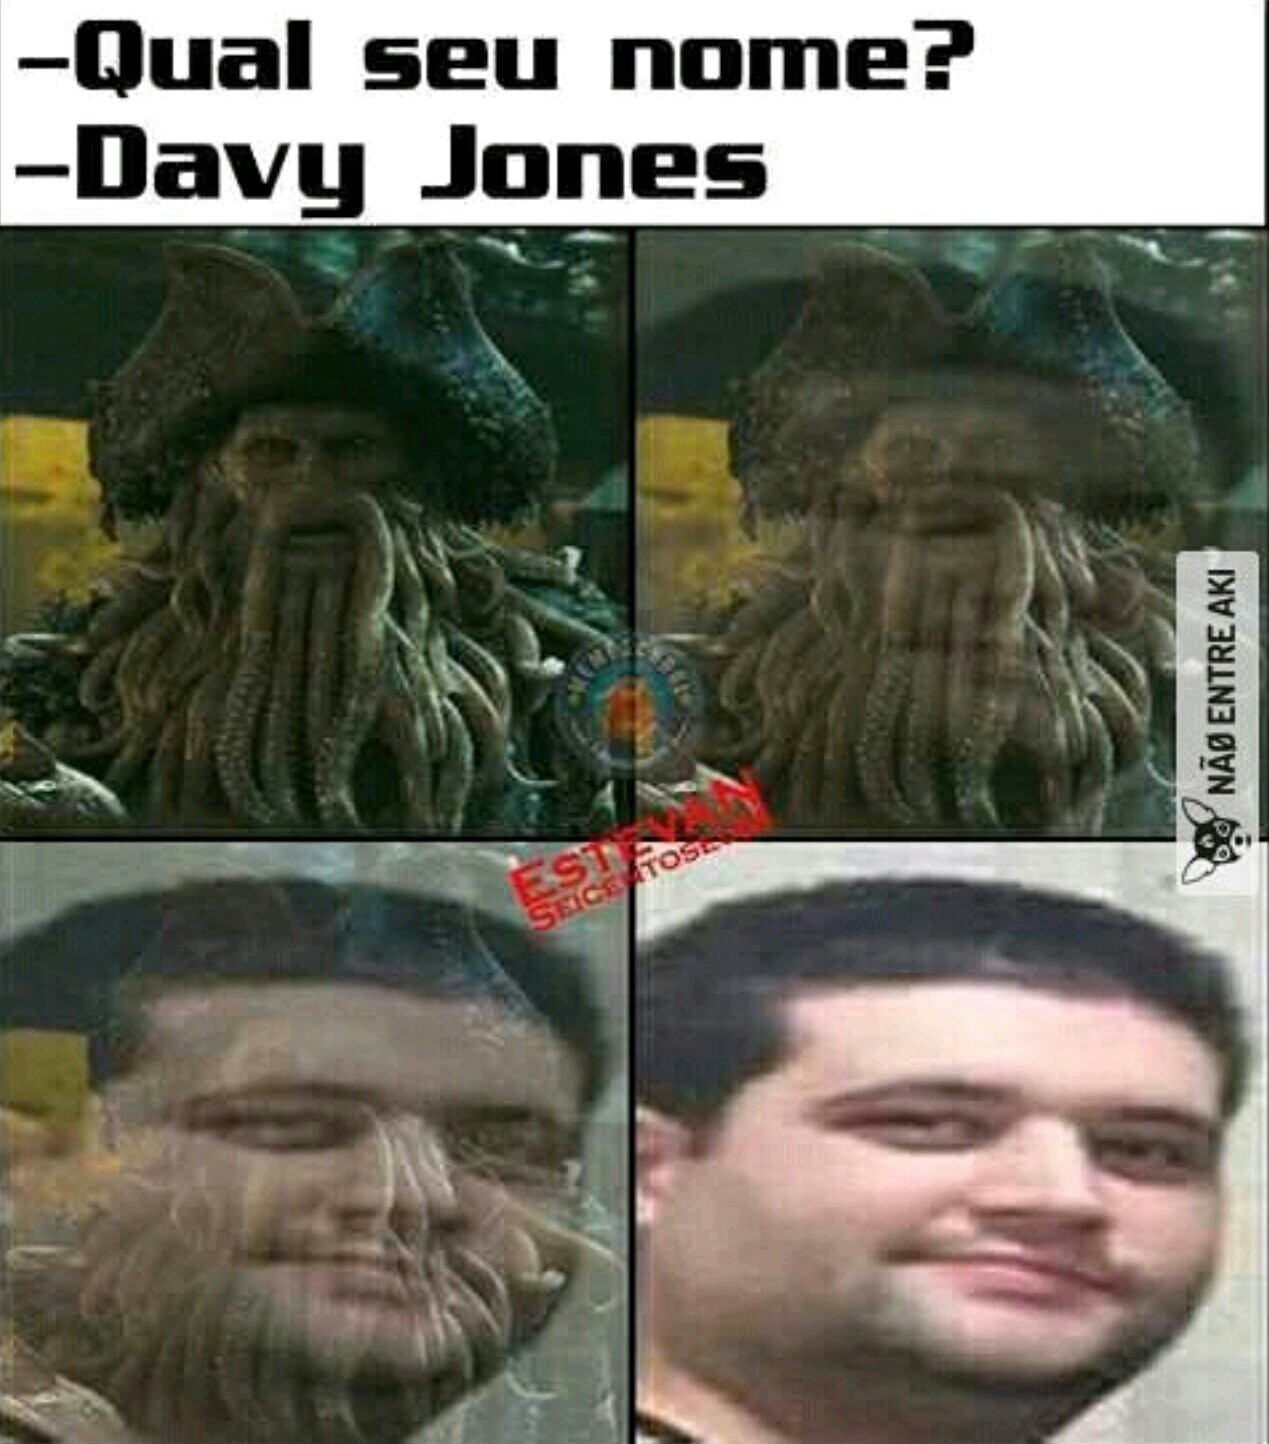 Davy jones - meme